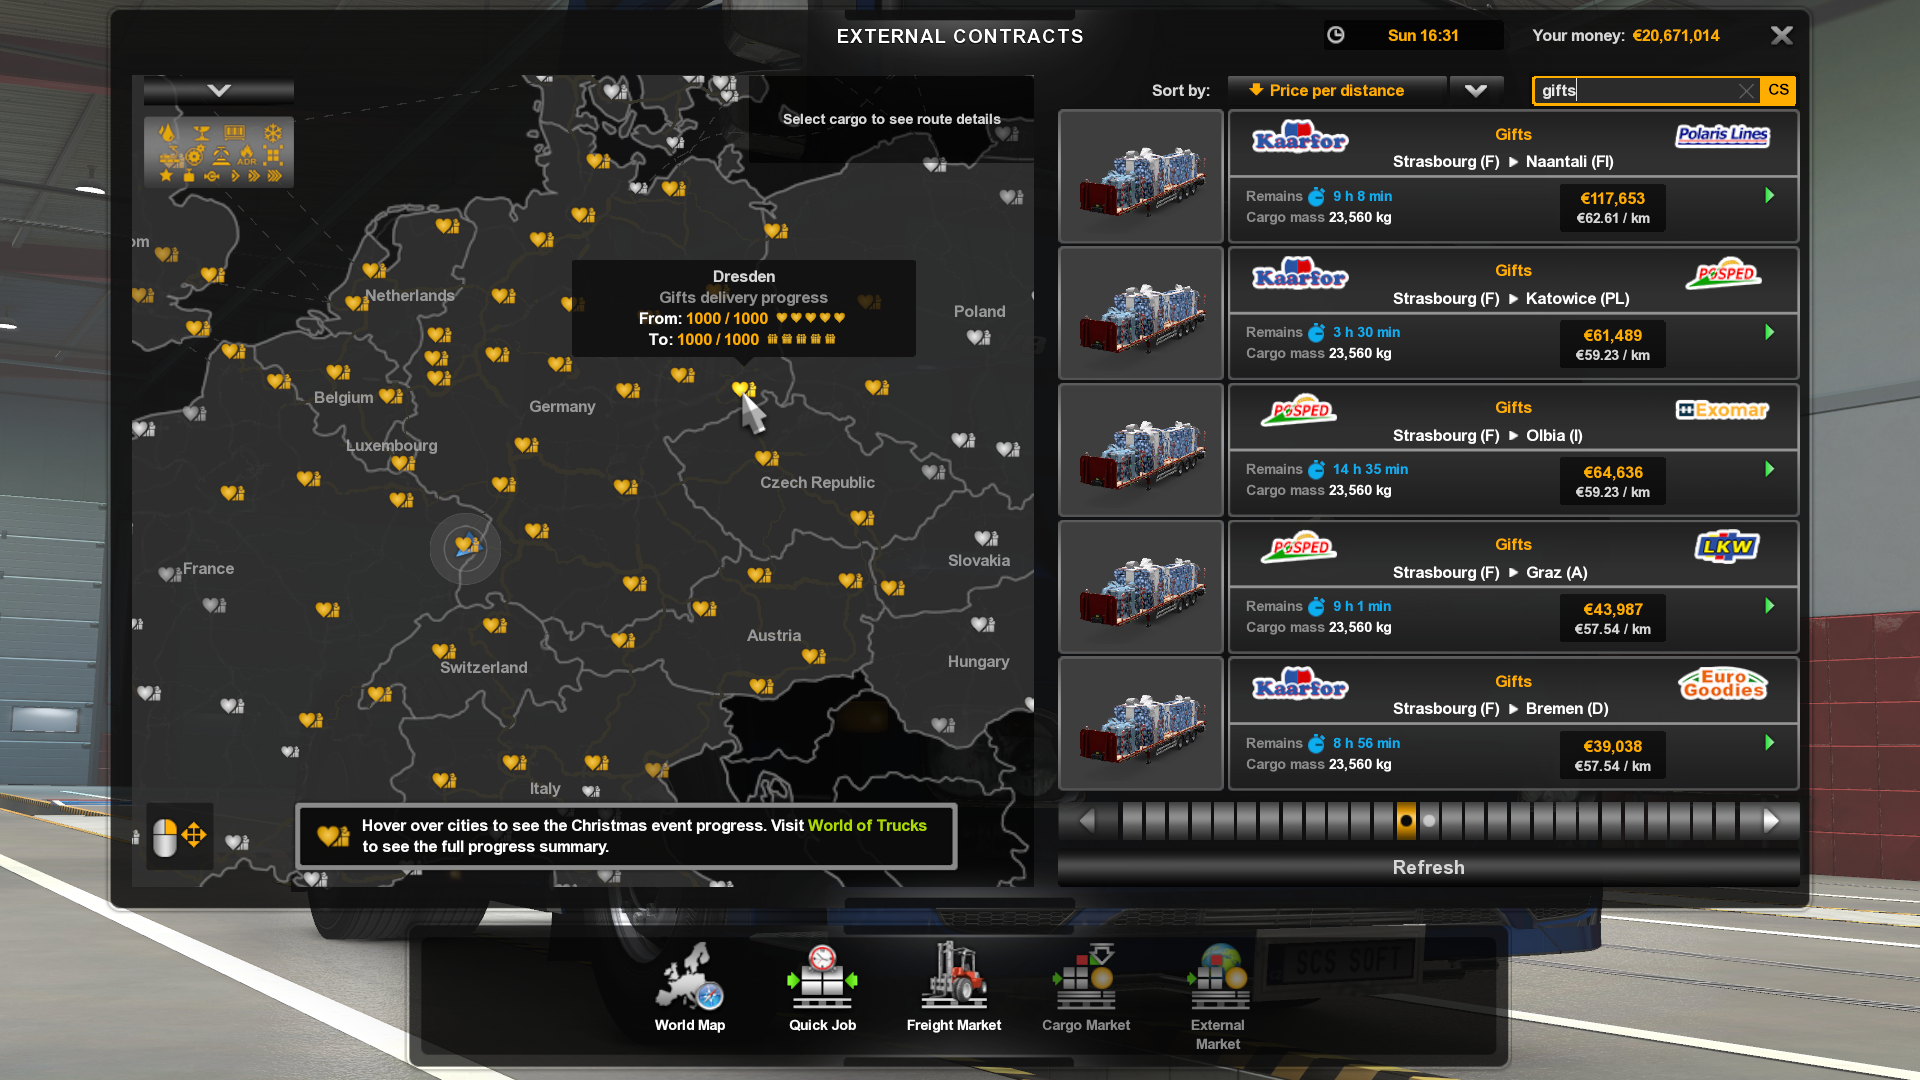 Steam Community :: Screenshot :: Euro Truck Simulator 2 - PC Gamer DLC